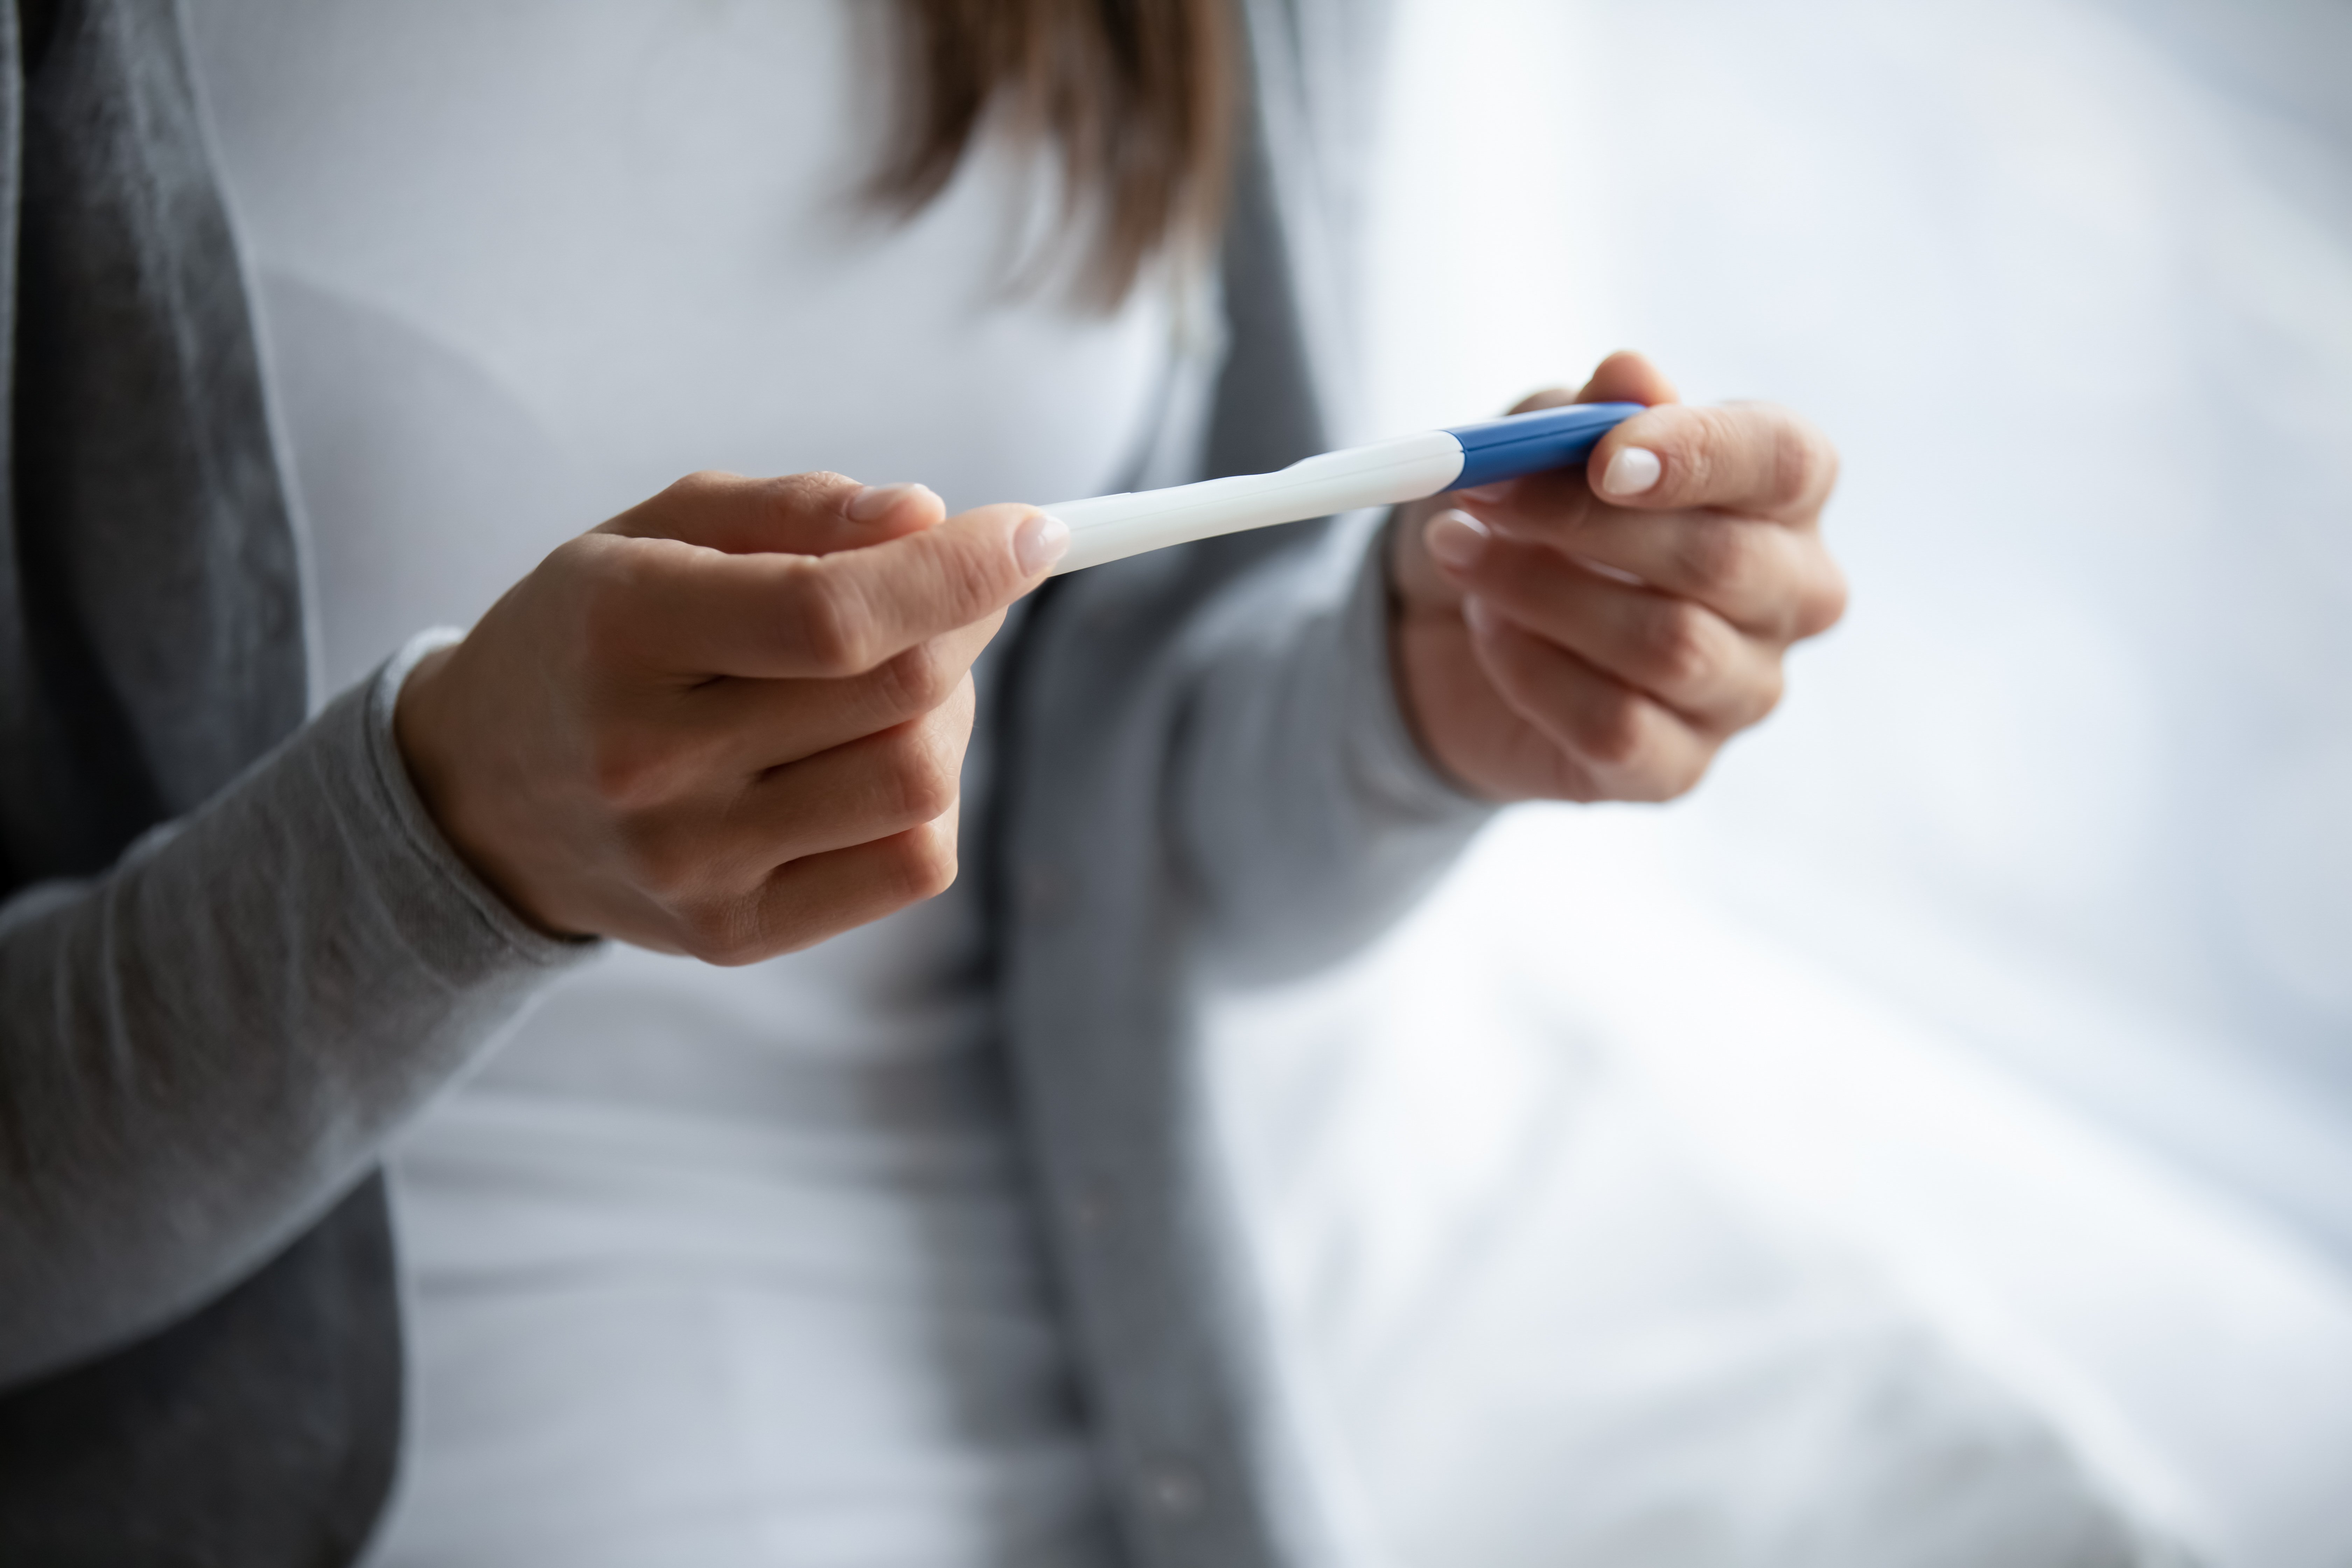 Mujer viendo prueba de embarazo. | Foto: Shutterstock